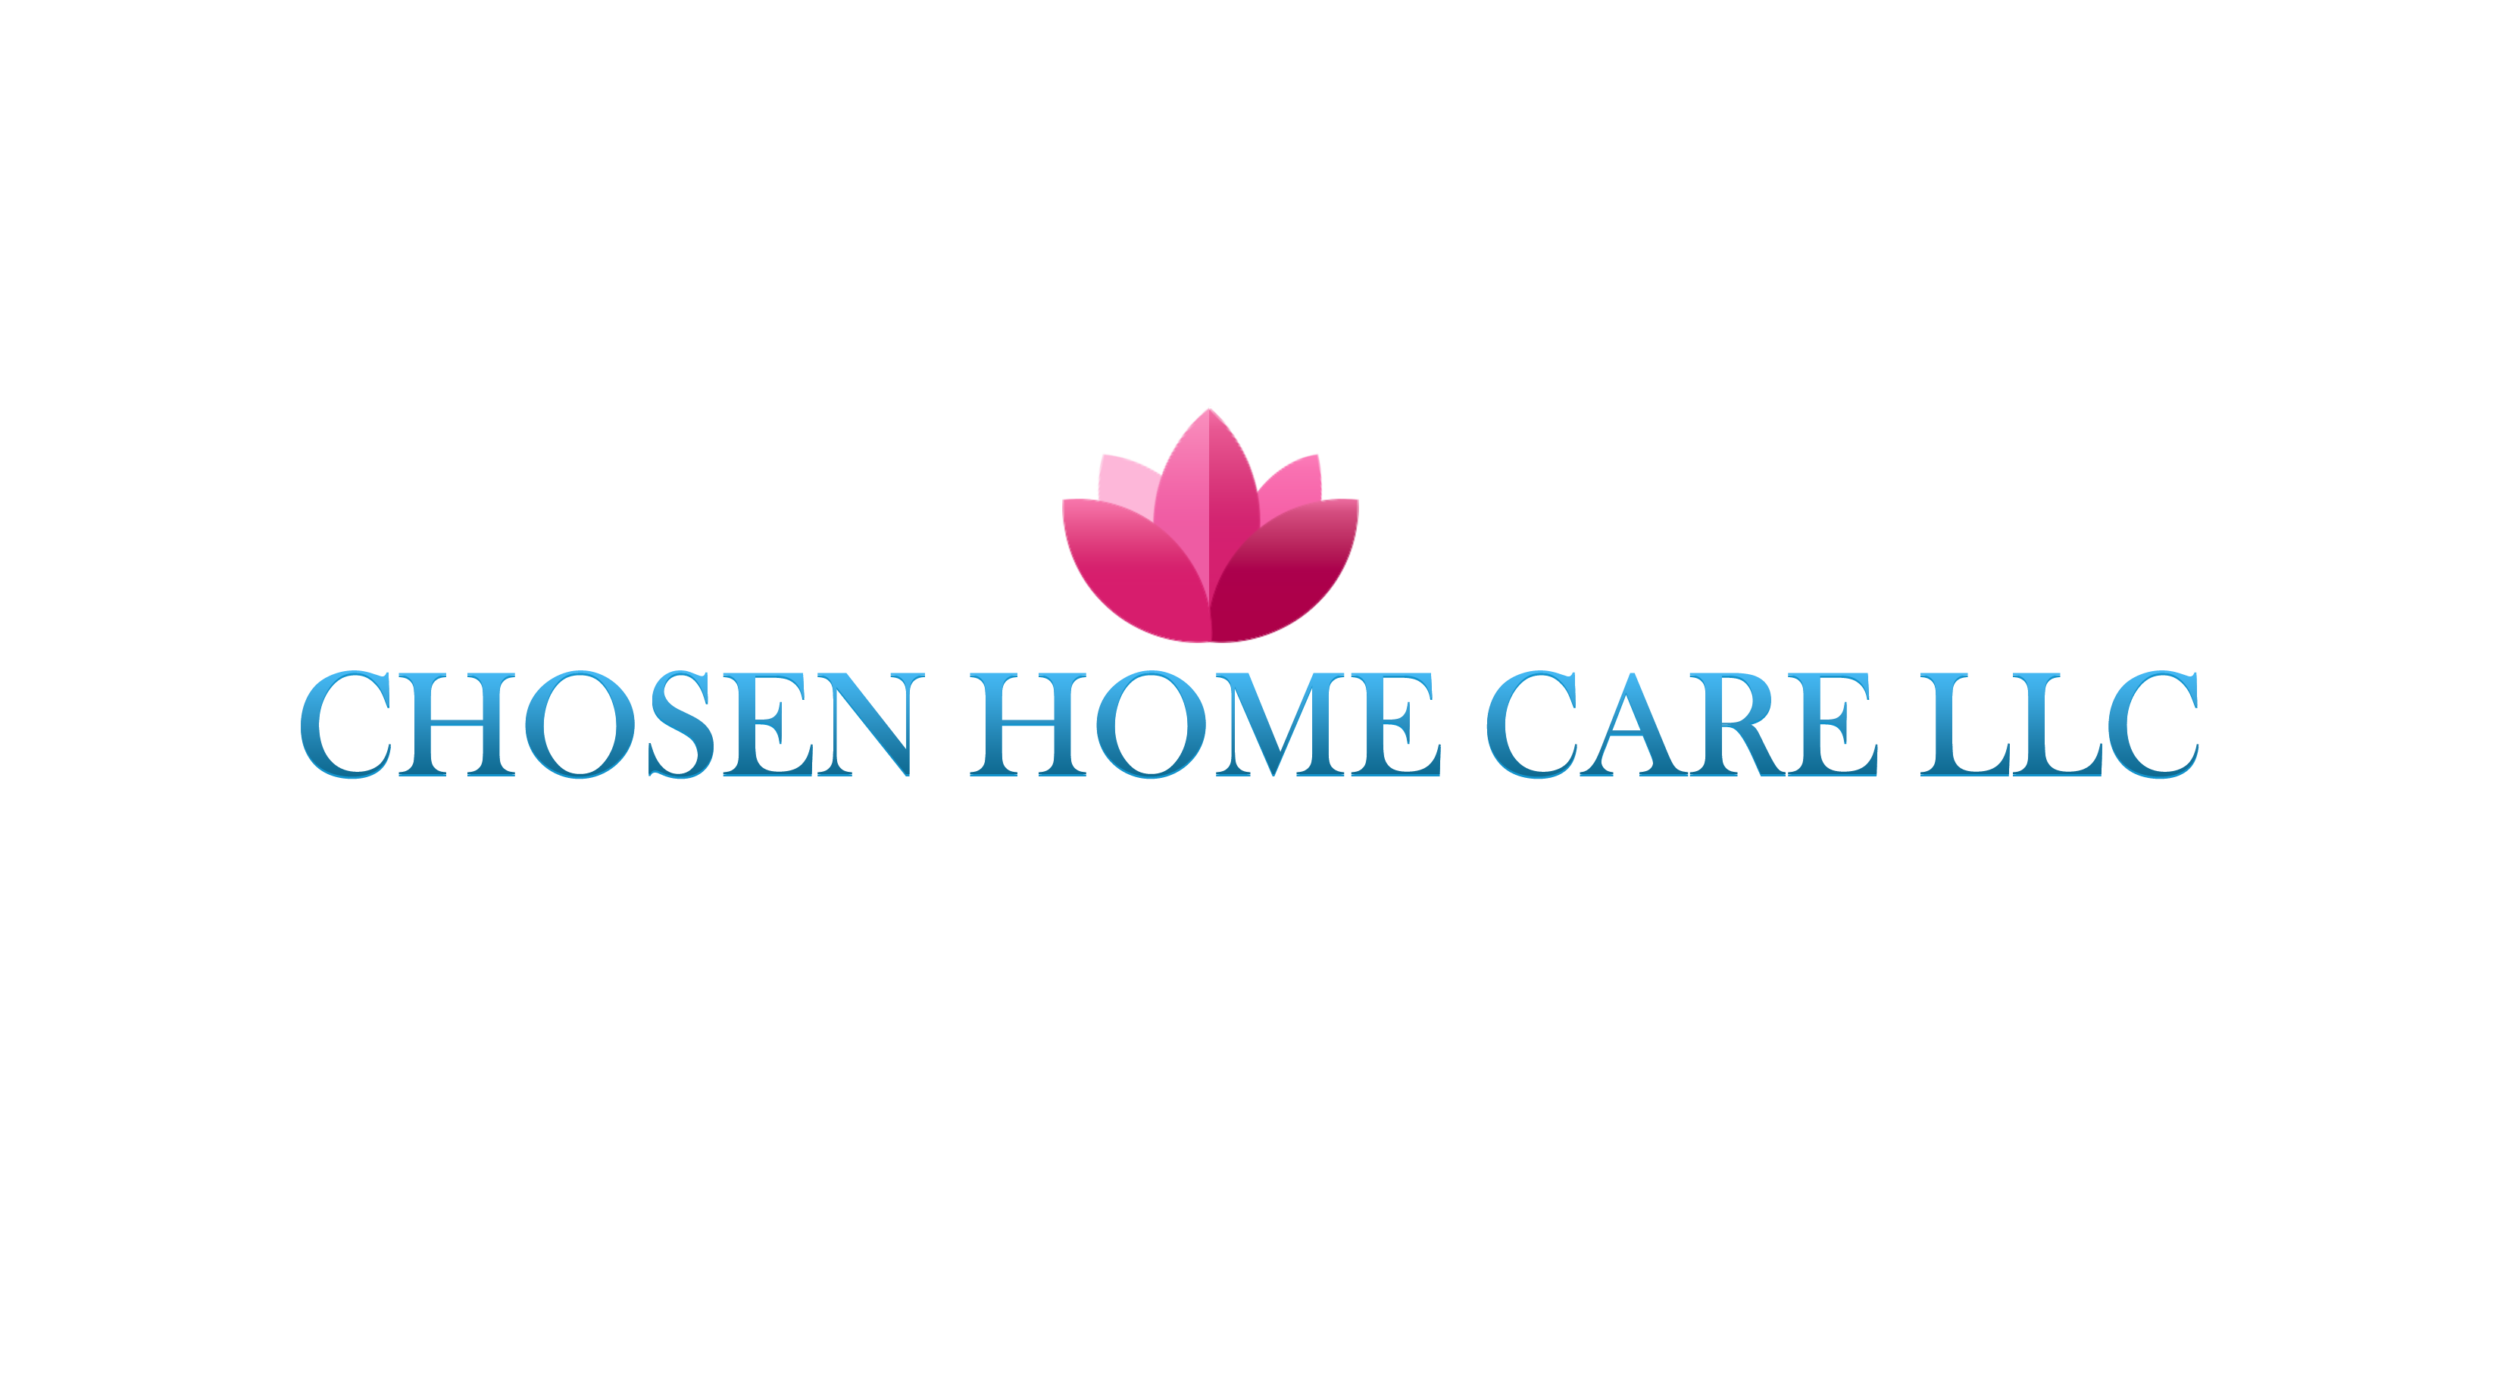 The Chosen Home Care LLC